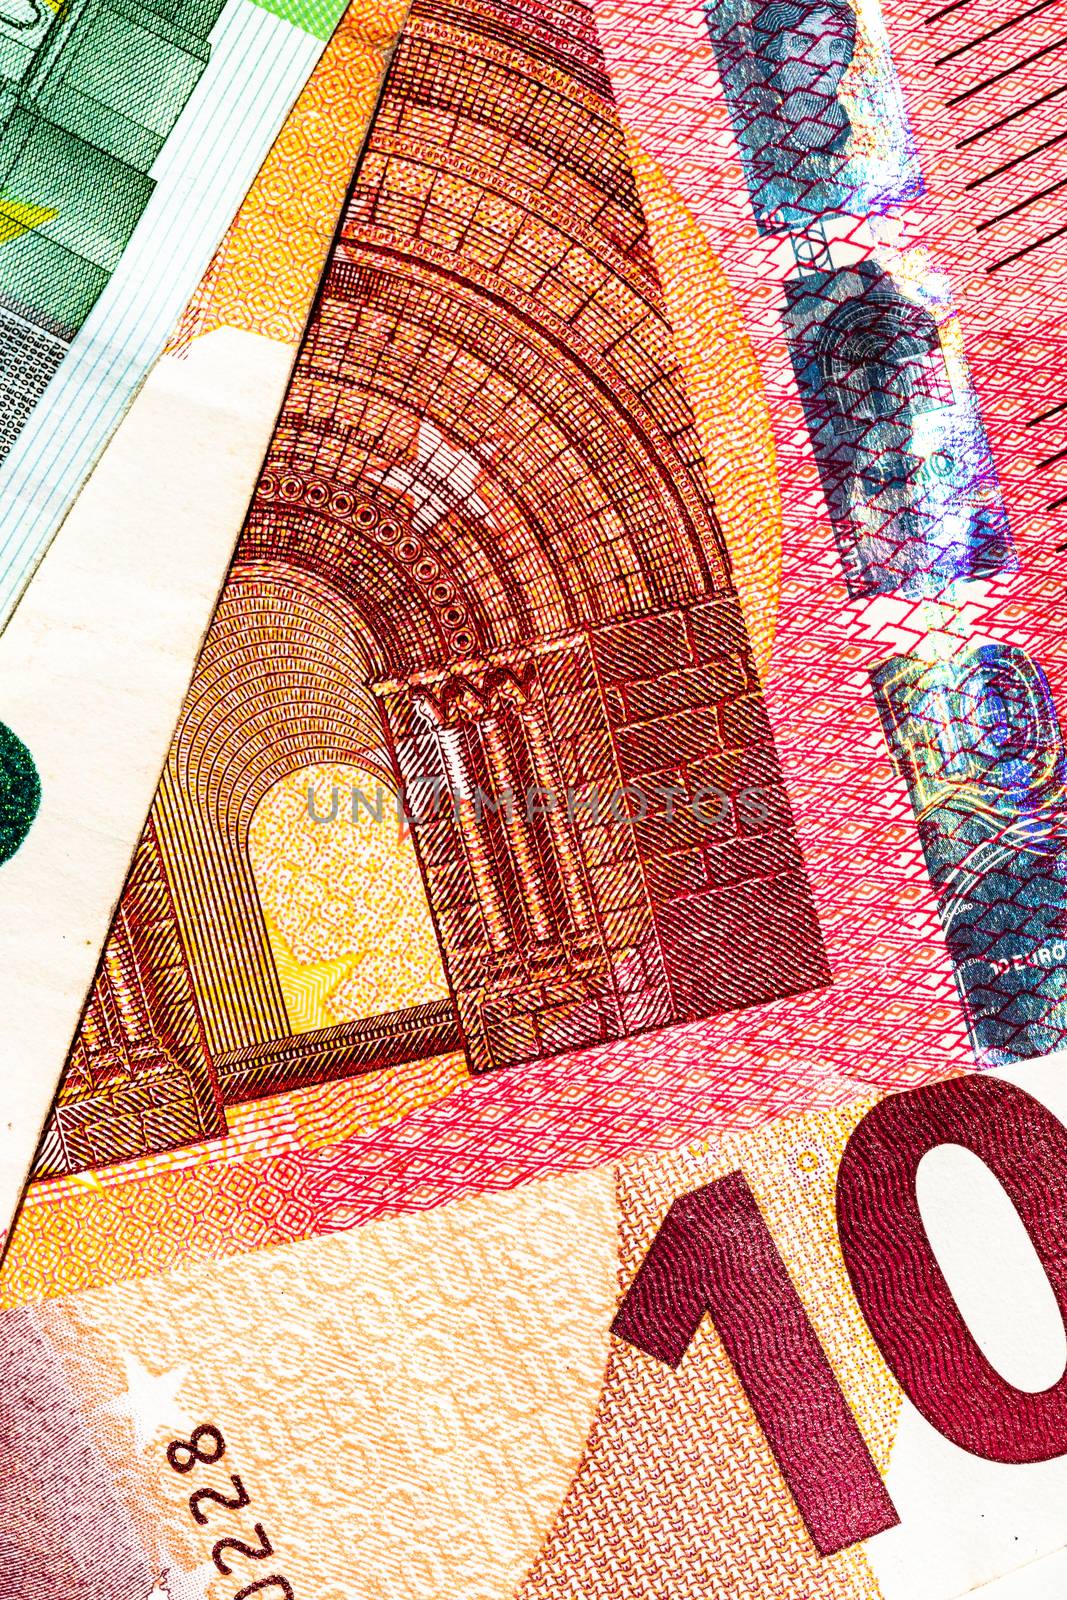 Close up of money euro banknotes, background of money euro isolated.